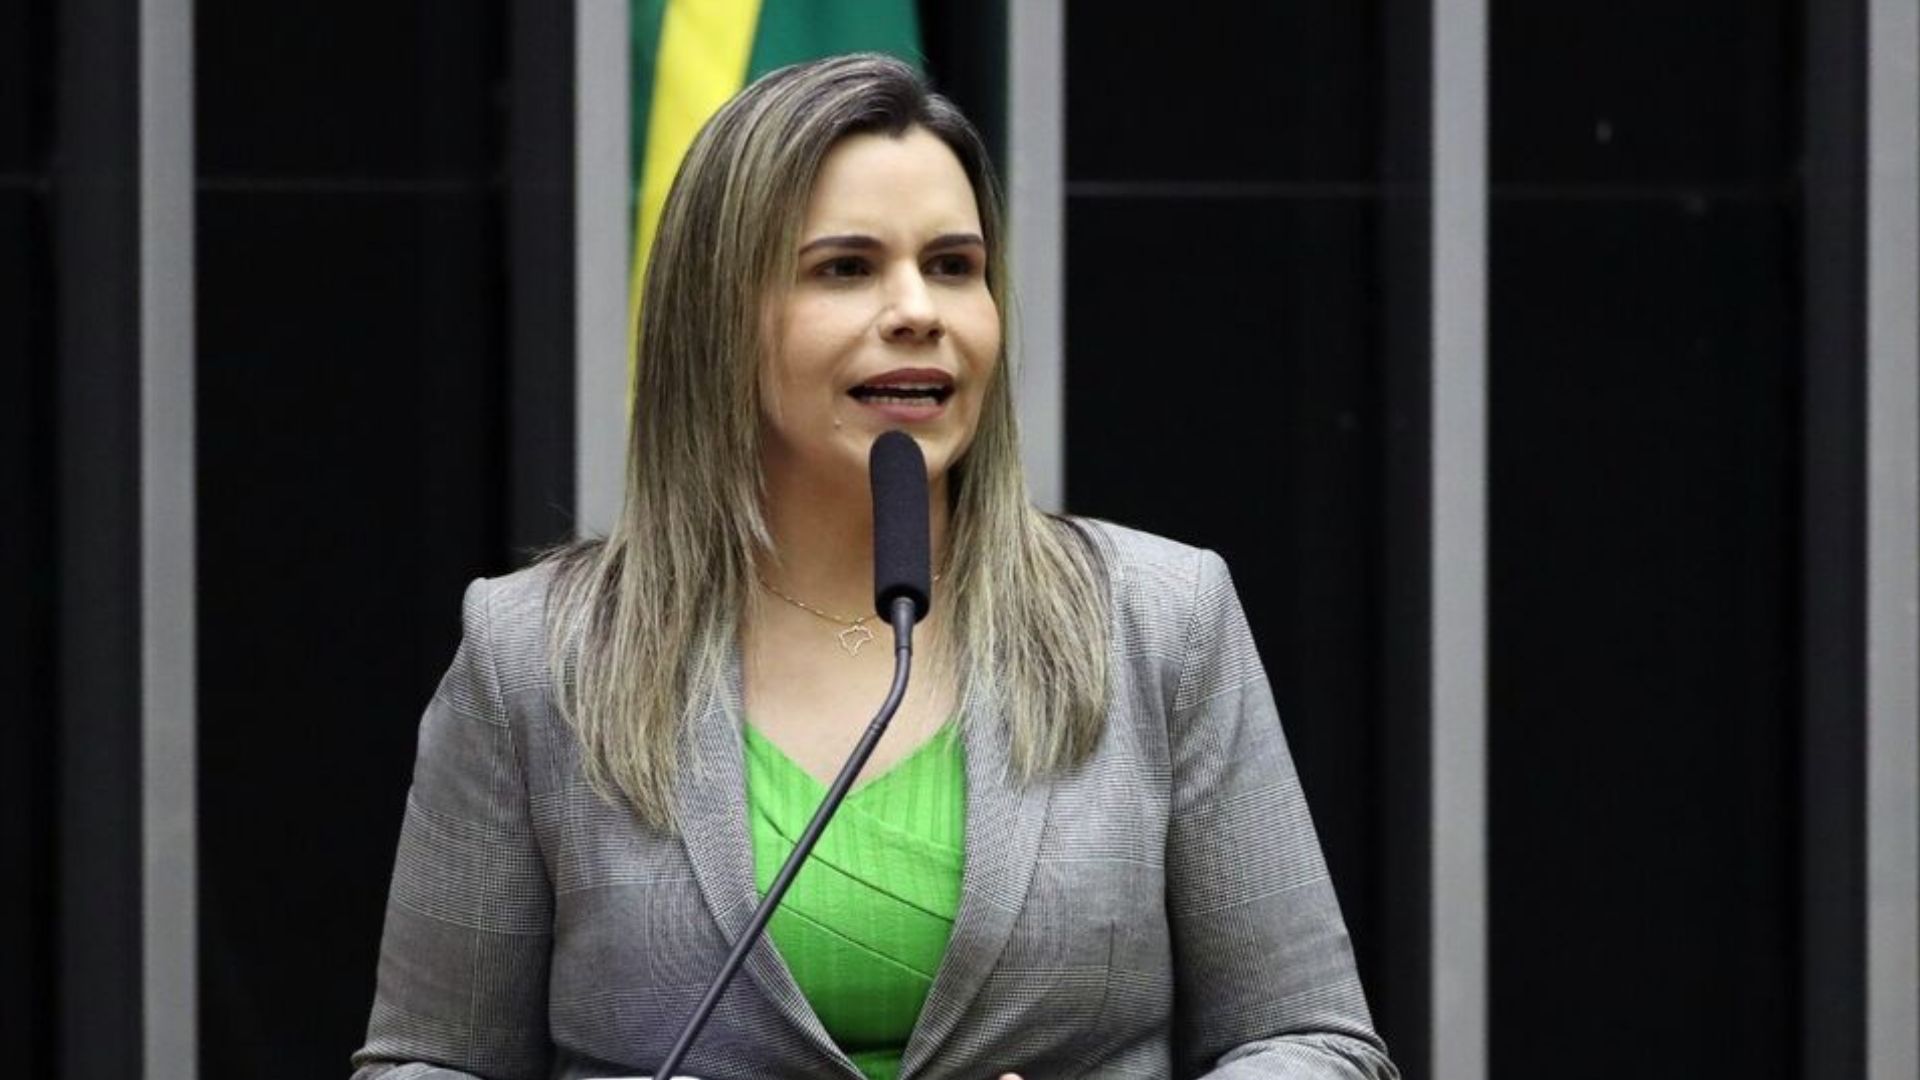 Deputada CLARISSA TÉRCIO propõe PL para proibir assistolia fetal em ABORTOS no Brasil